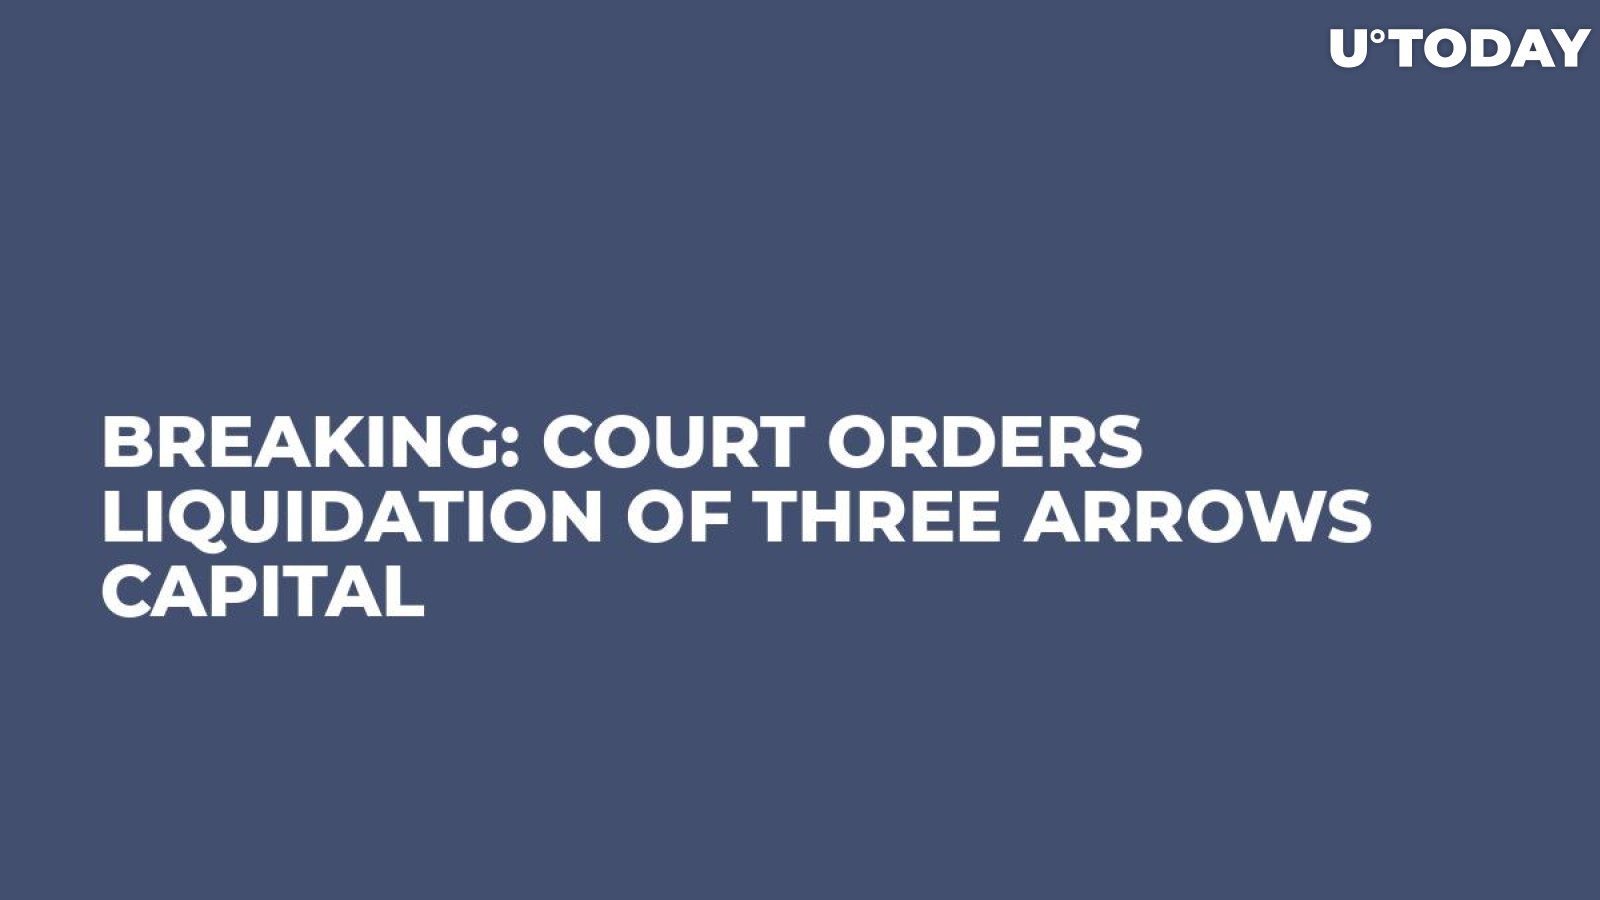 BREAKING: Court Orders Liquidation of Three Arrows Capital